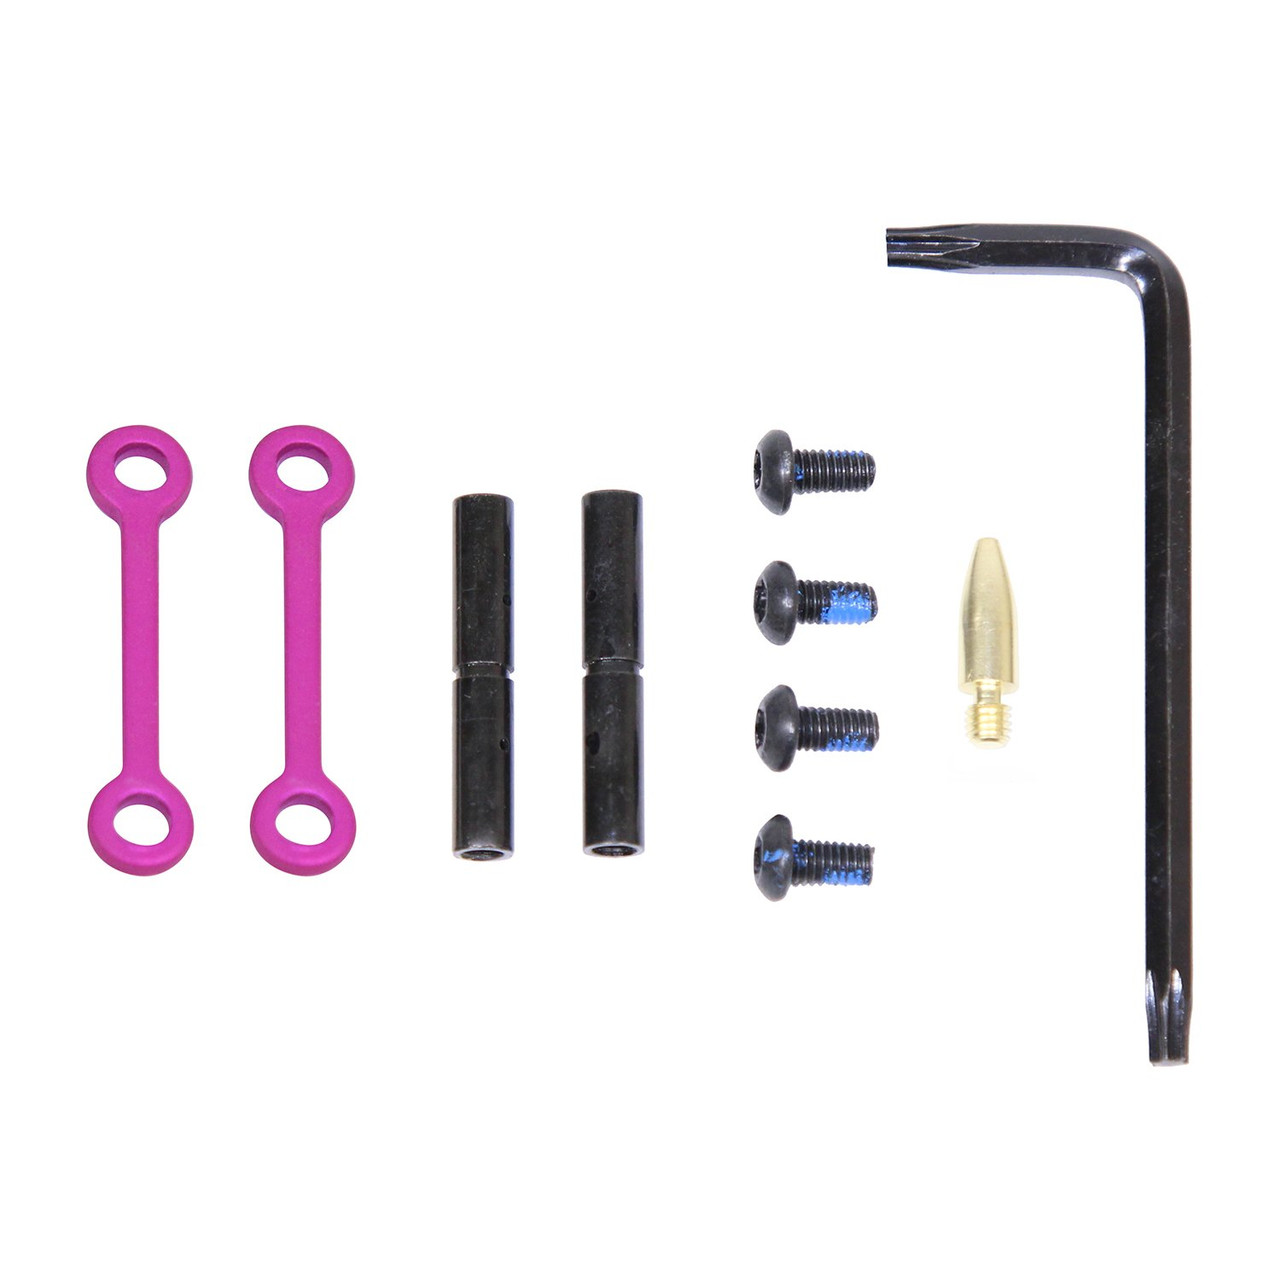 Guntec USA GT-ARP-PINK AR-15 Complete Anti-Rotation Trigger/Hammer Pin Set (Anodized Pink)